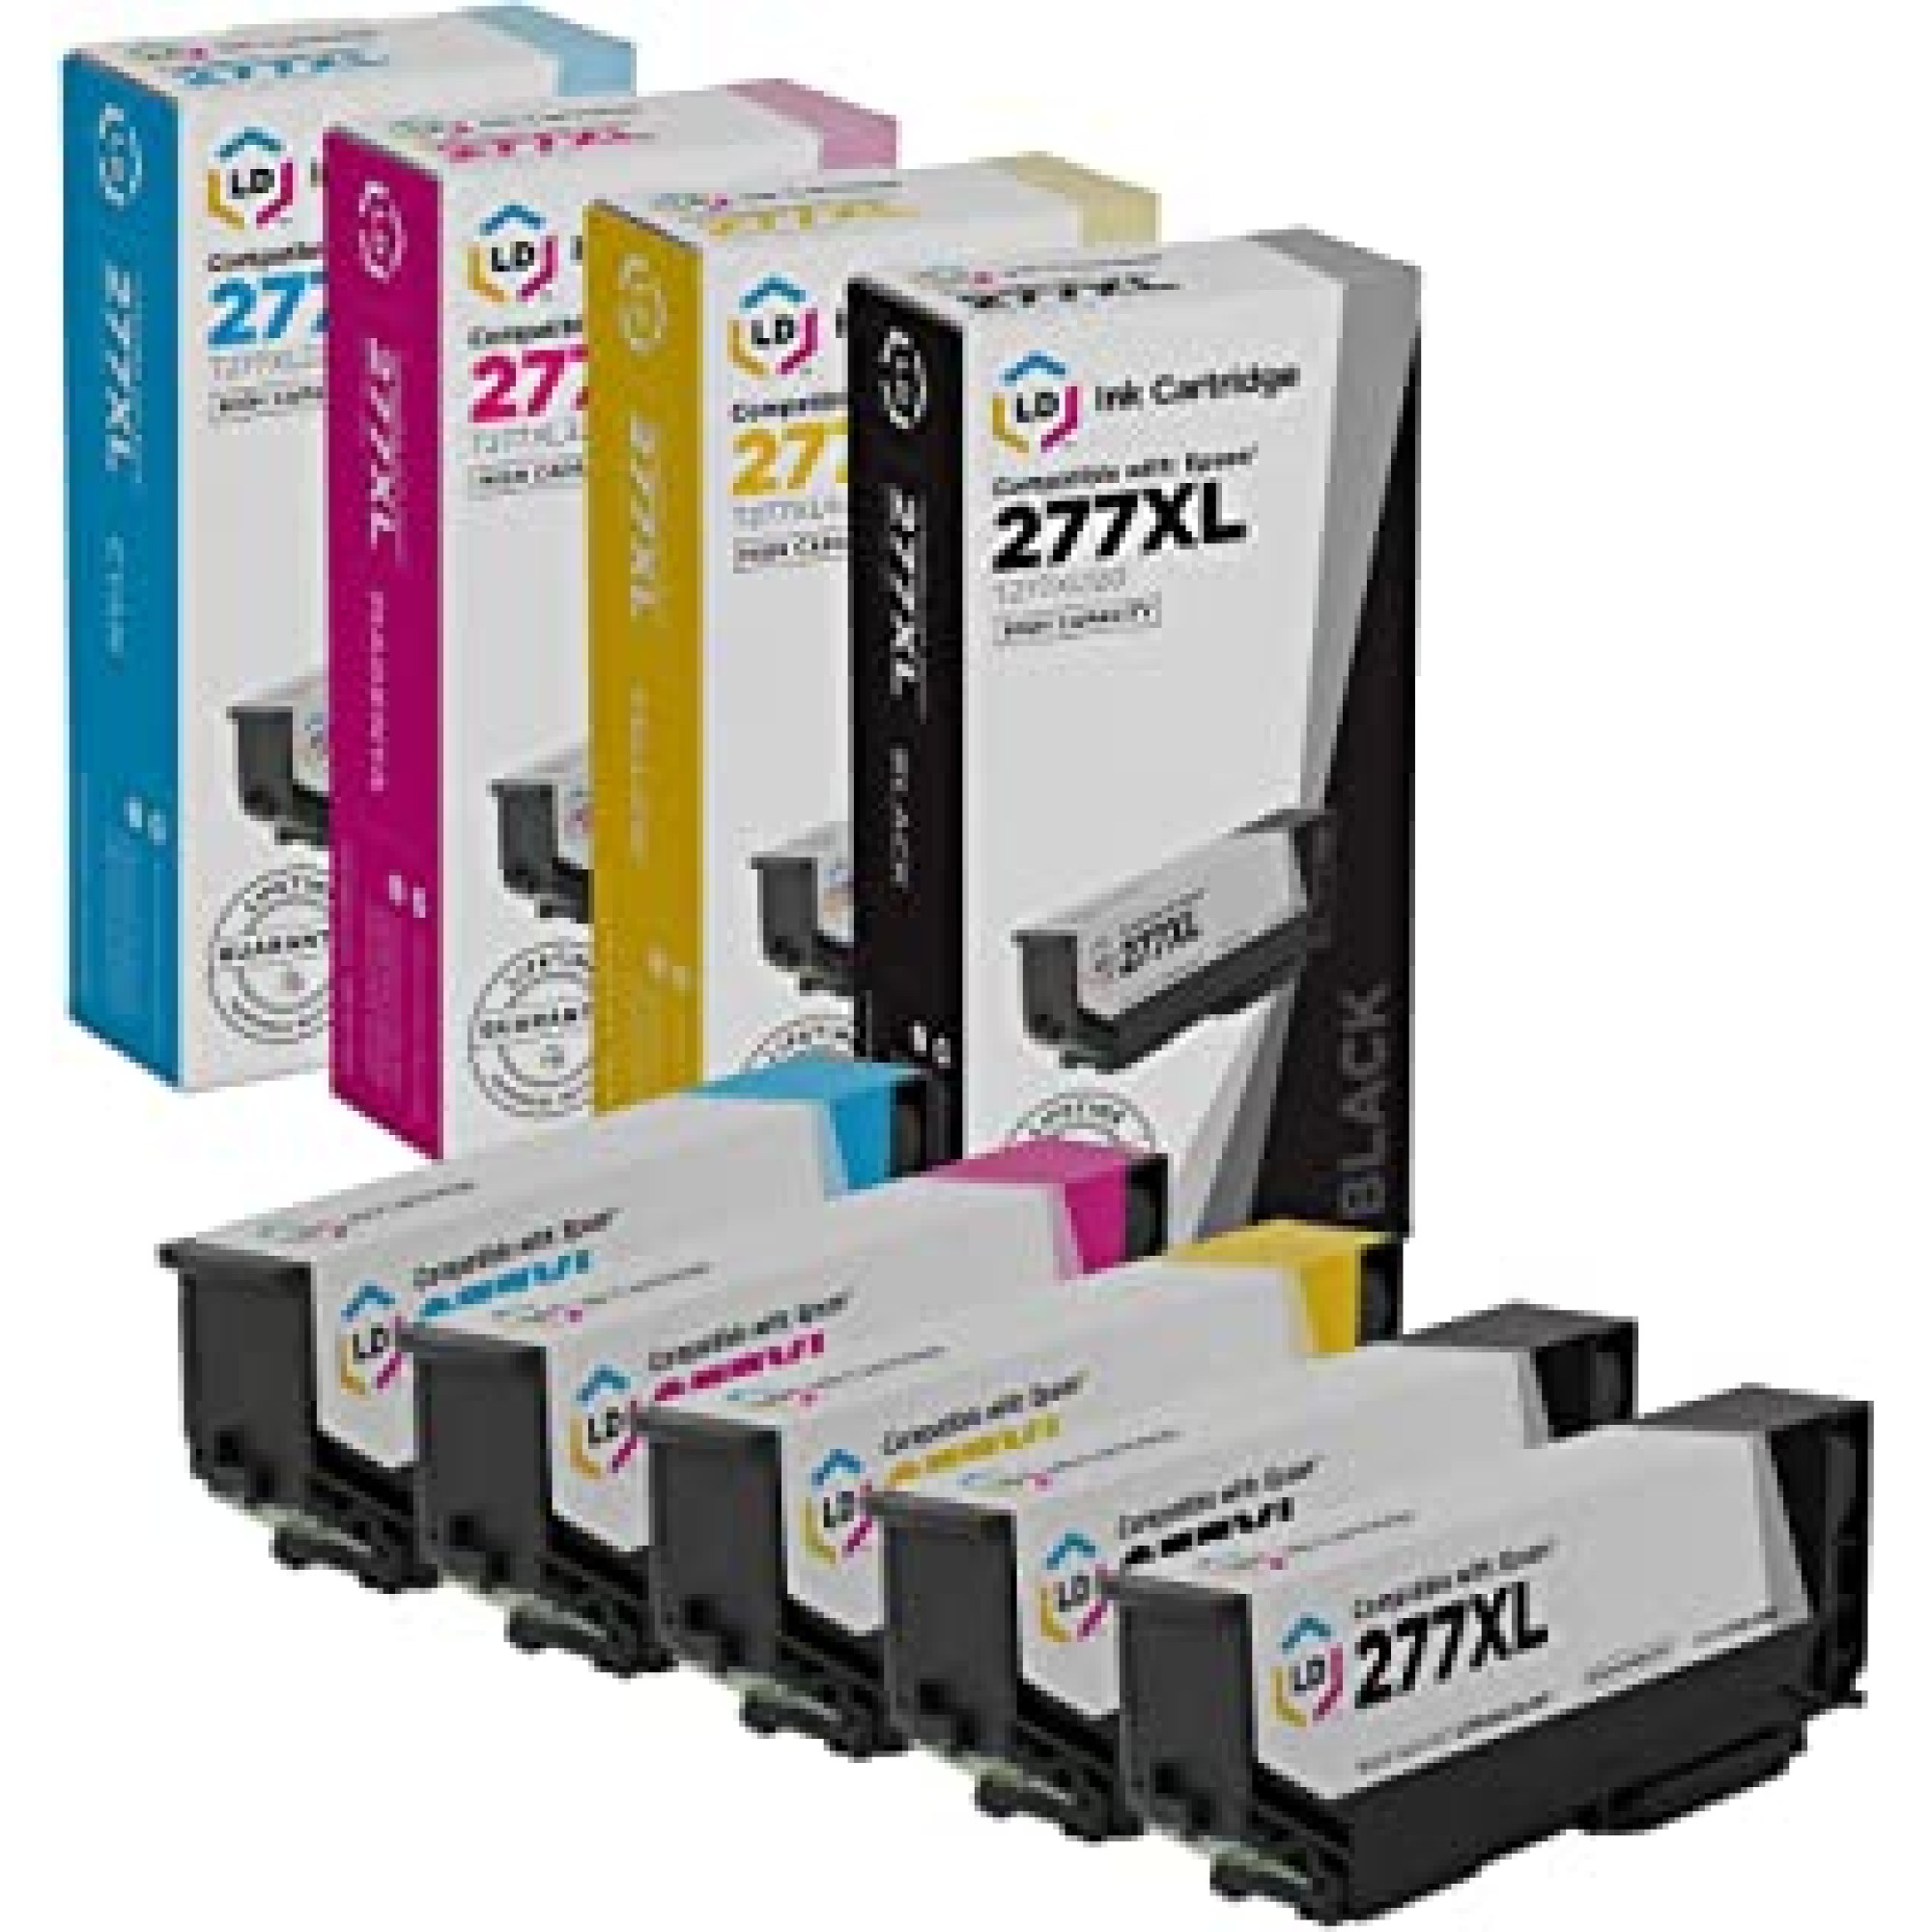 Epson 277XL Value Pack Cartridges